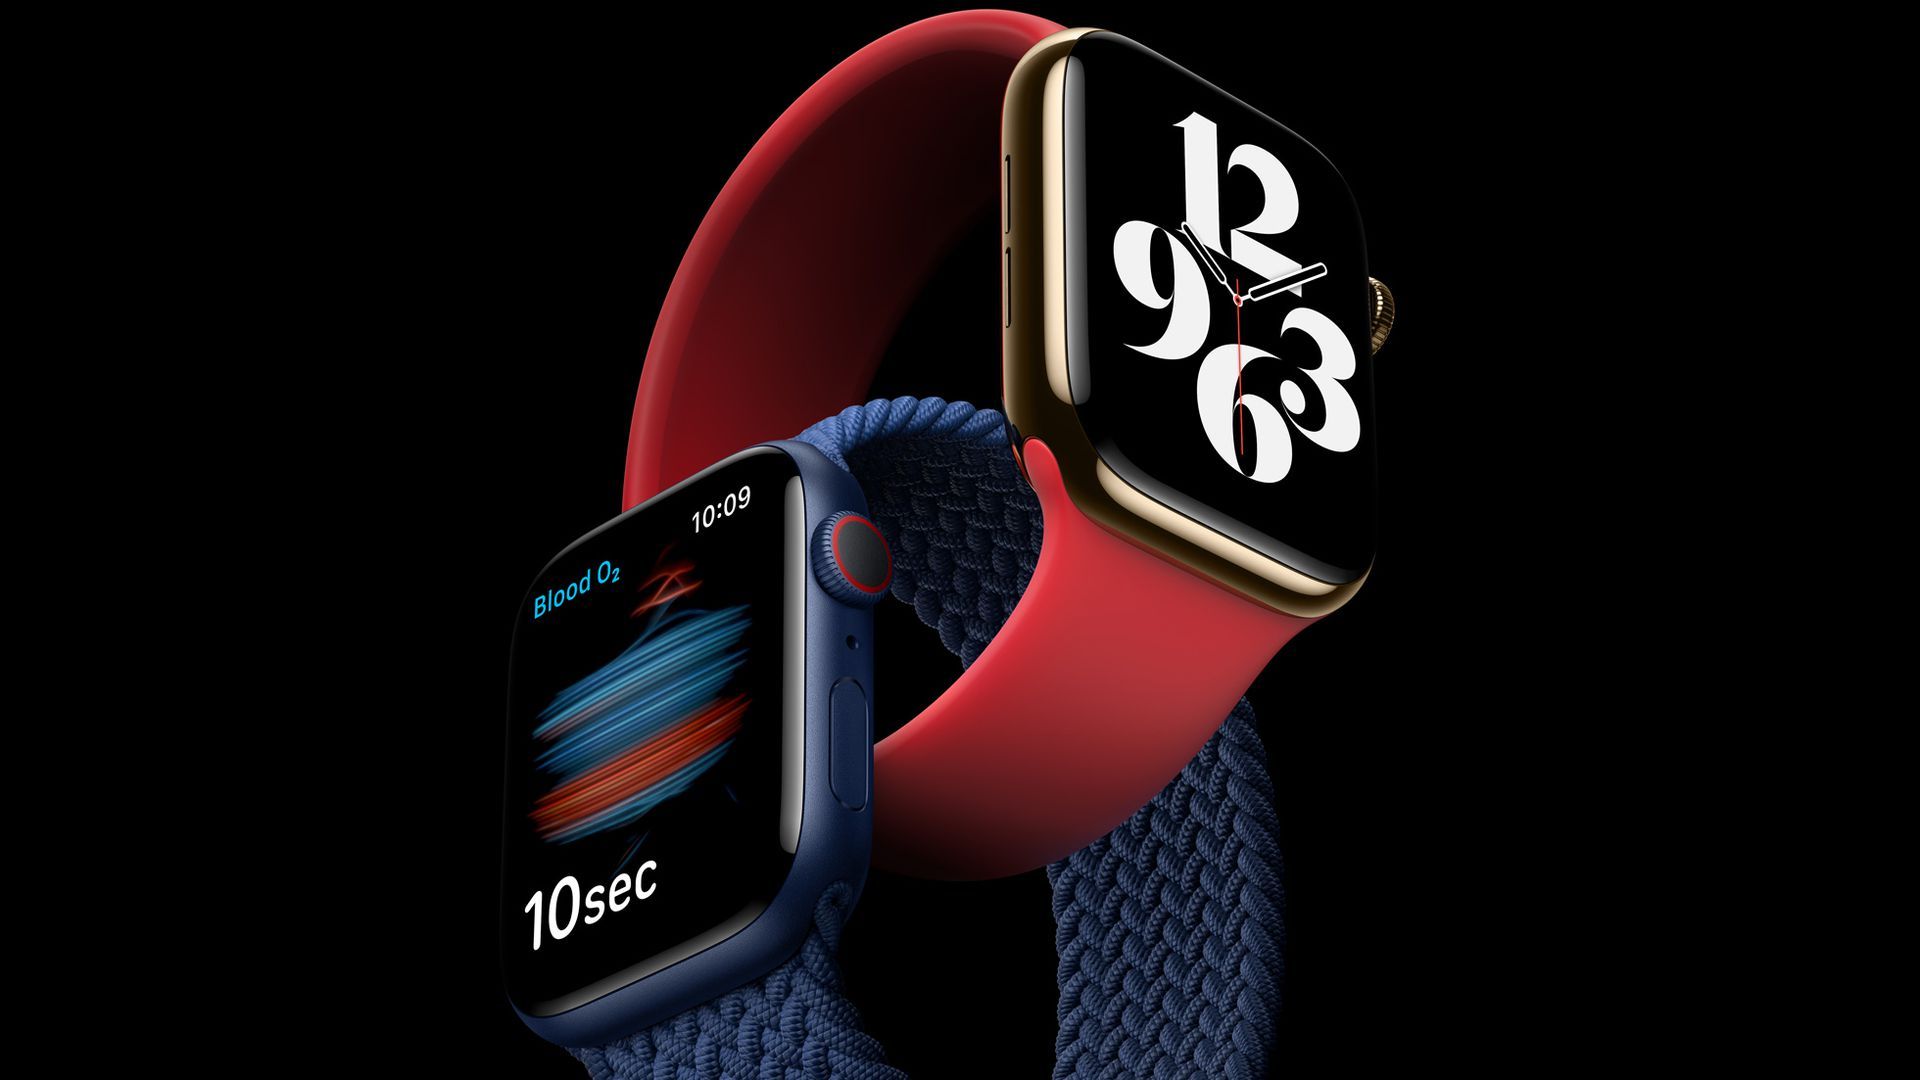 The new Apple Watch Series 6. Photo: Apple